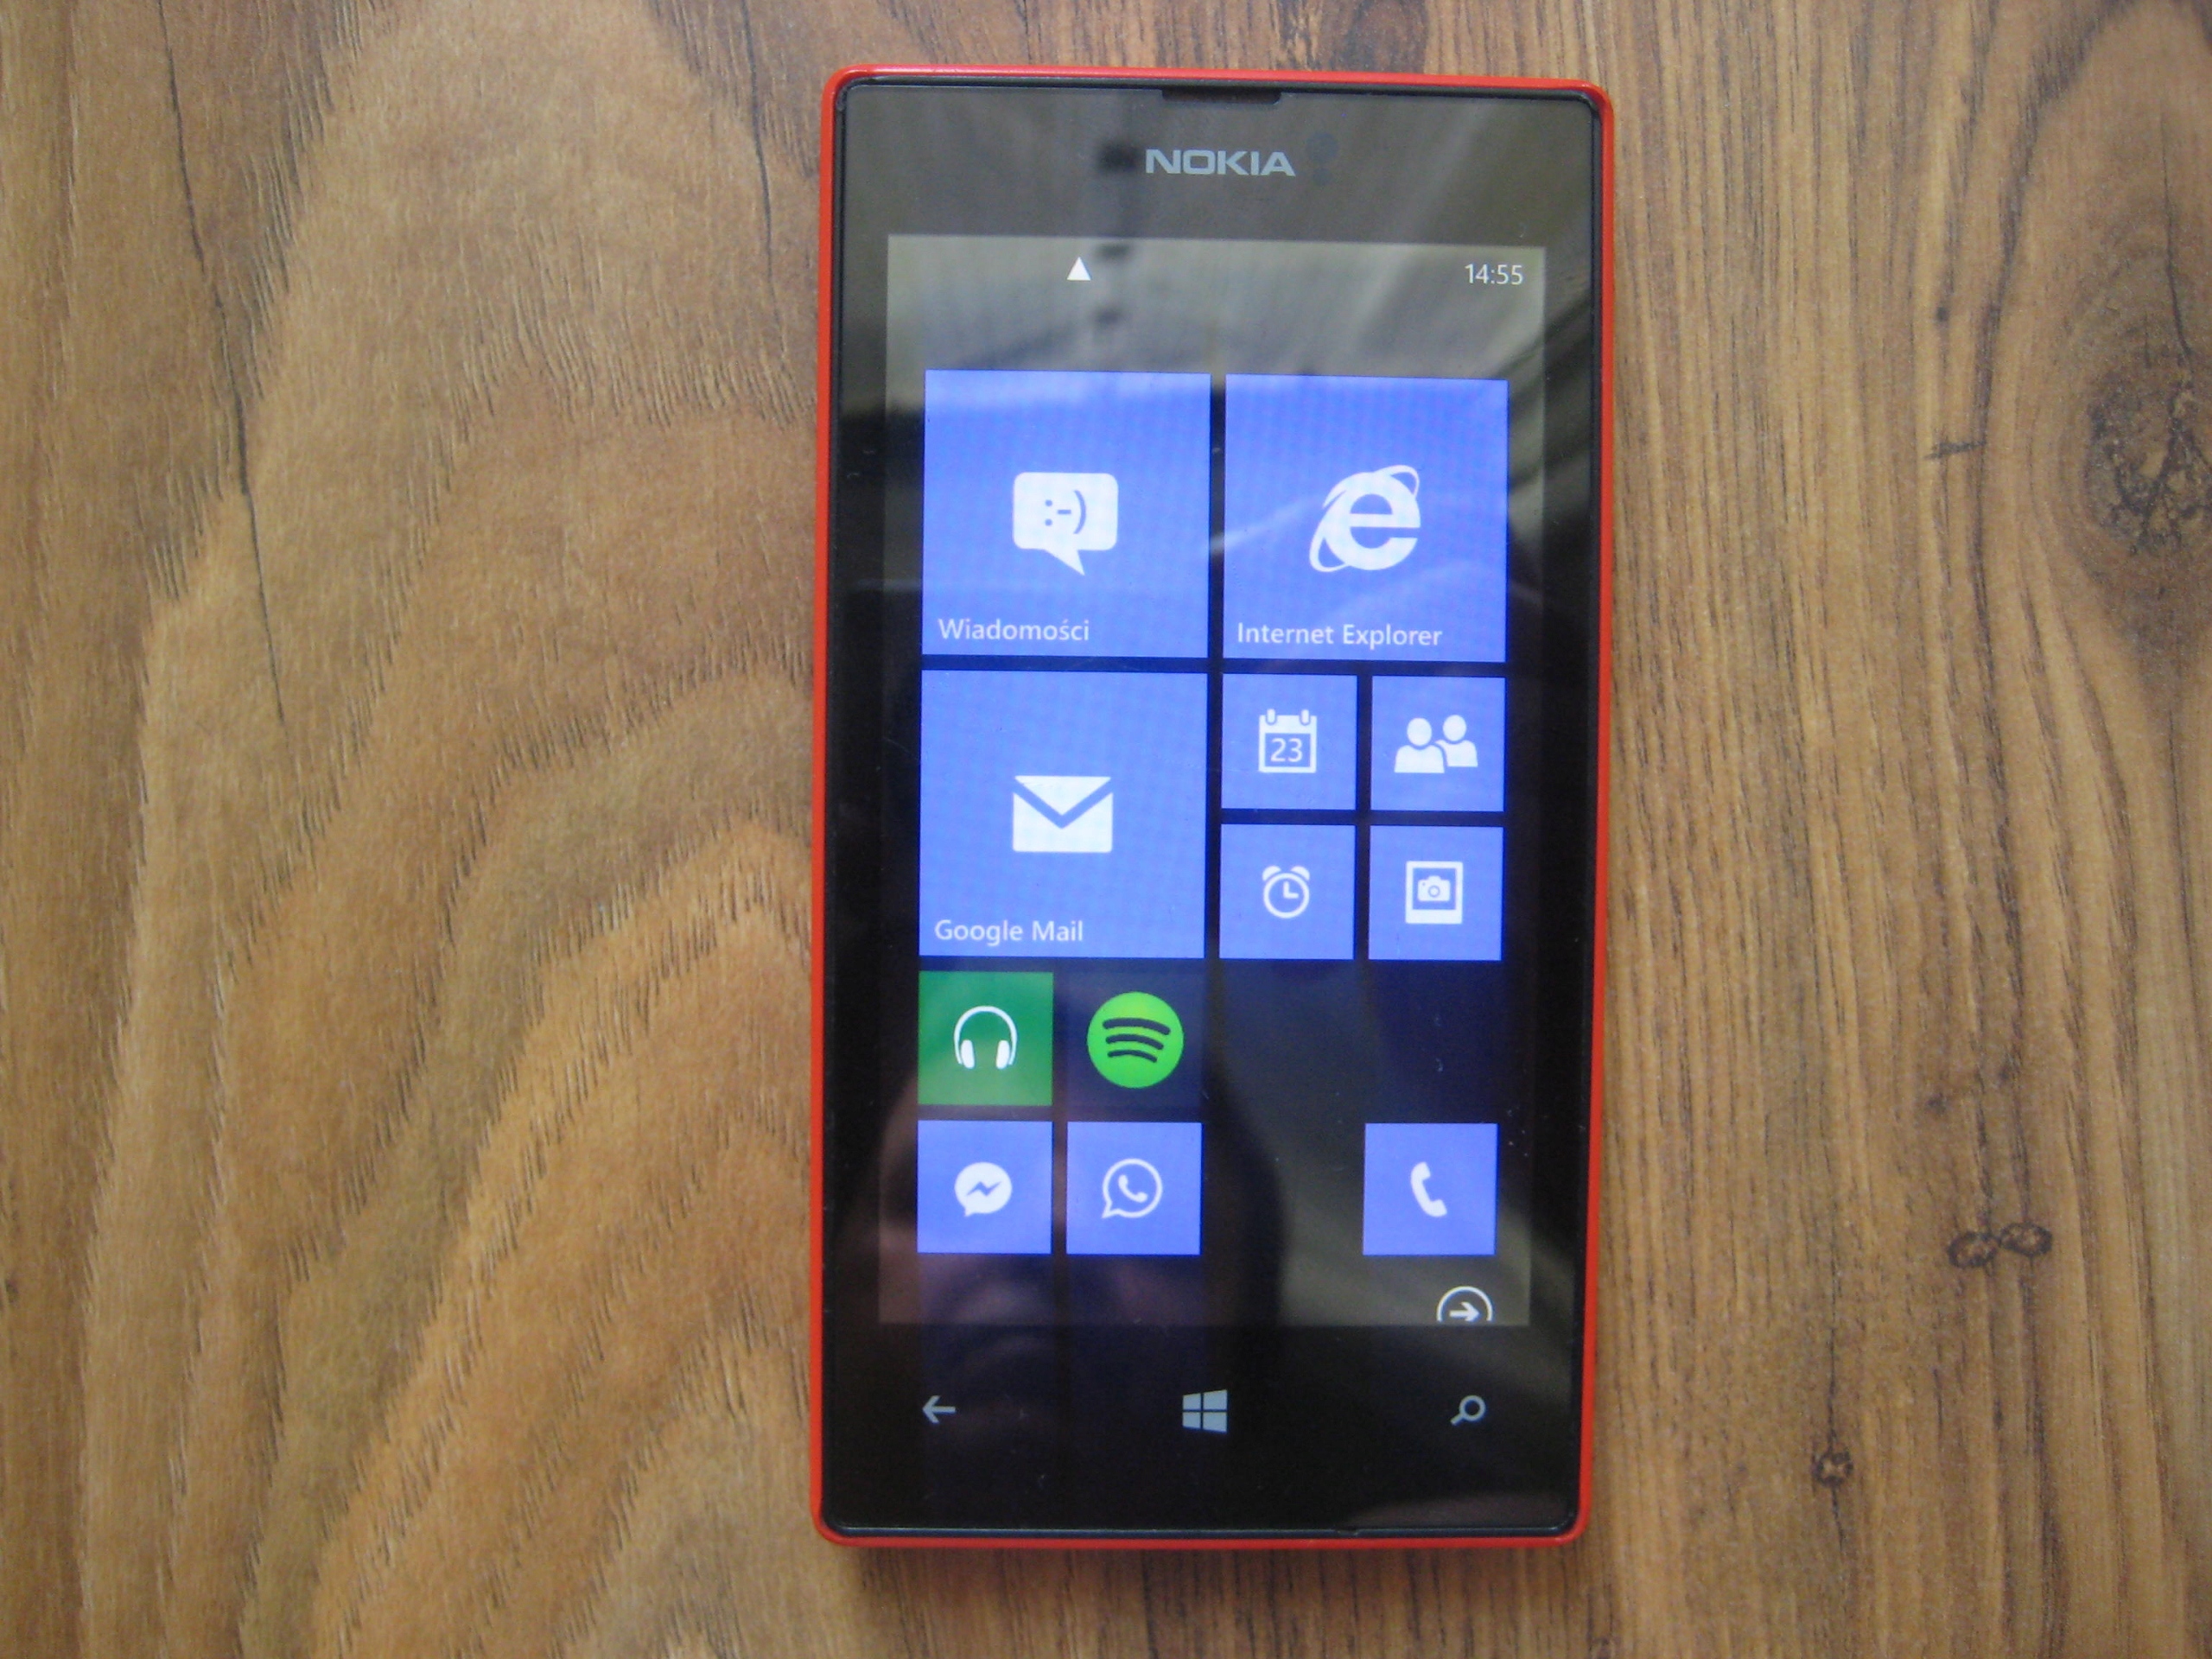 Nokia Lumia 520 Red Bez Simlock Bdb Stan Real Foto 8336238874 Sklep Internetowy Agd Rtv Telefony Laptopy Allegro Pl